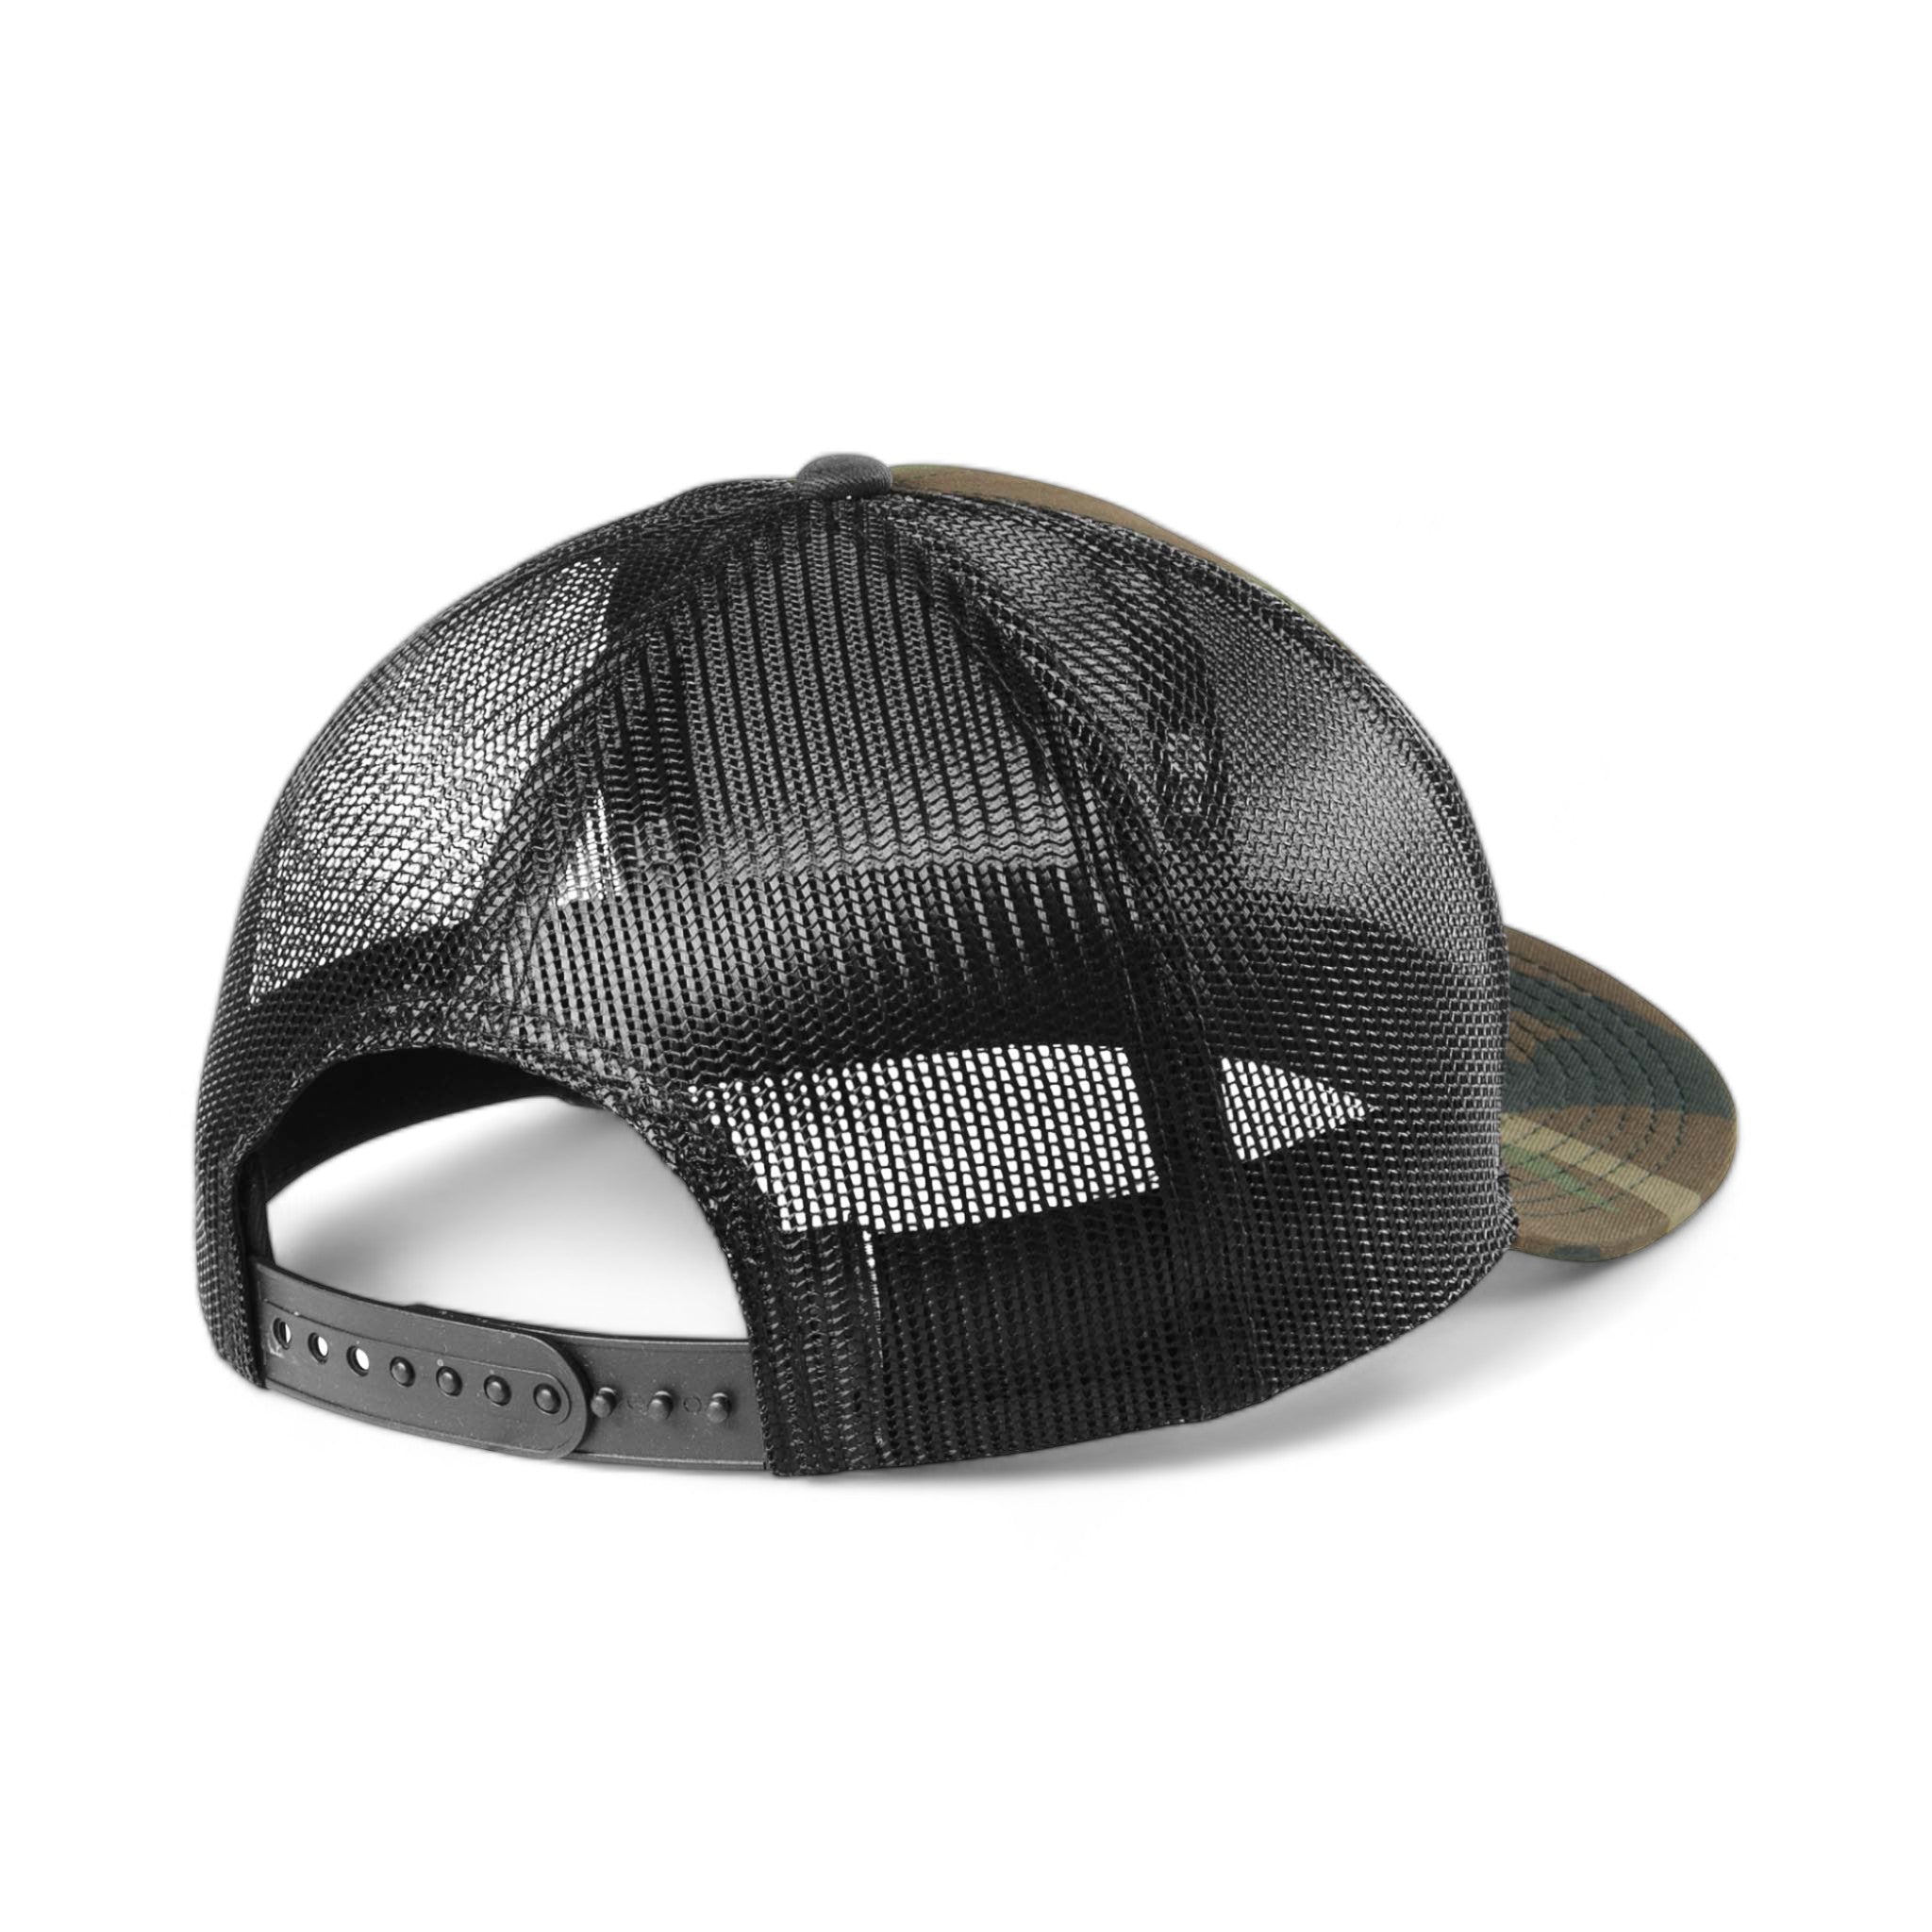 Back view of New Era NE207 custom hat in camo and black